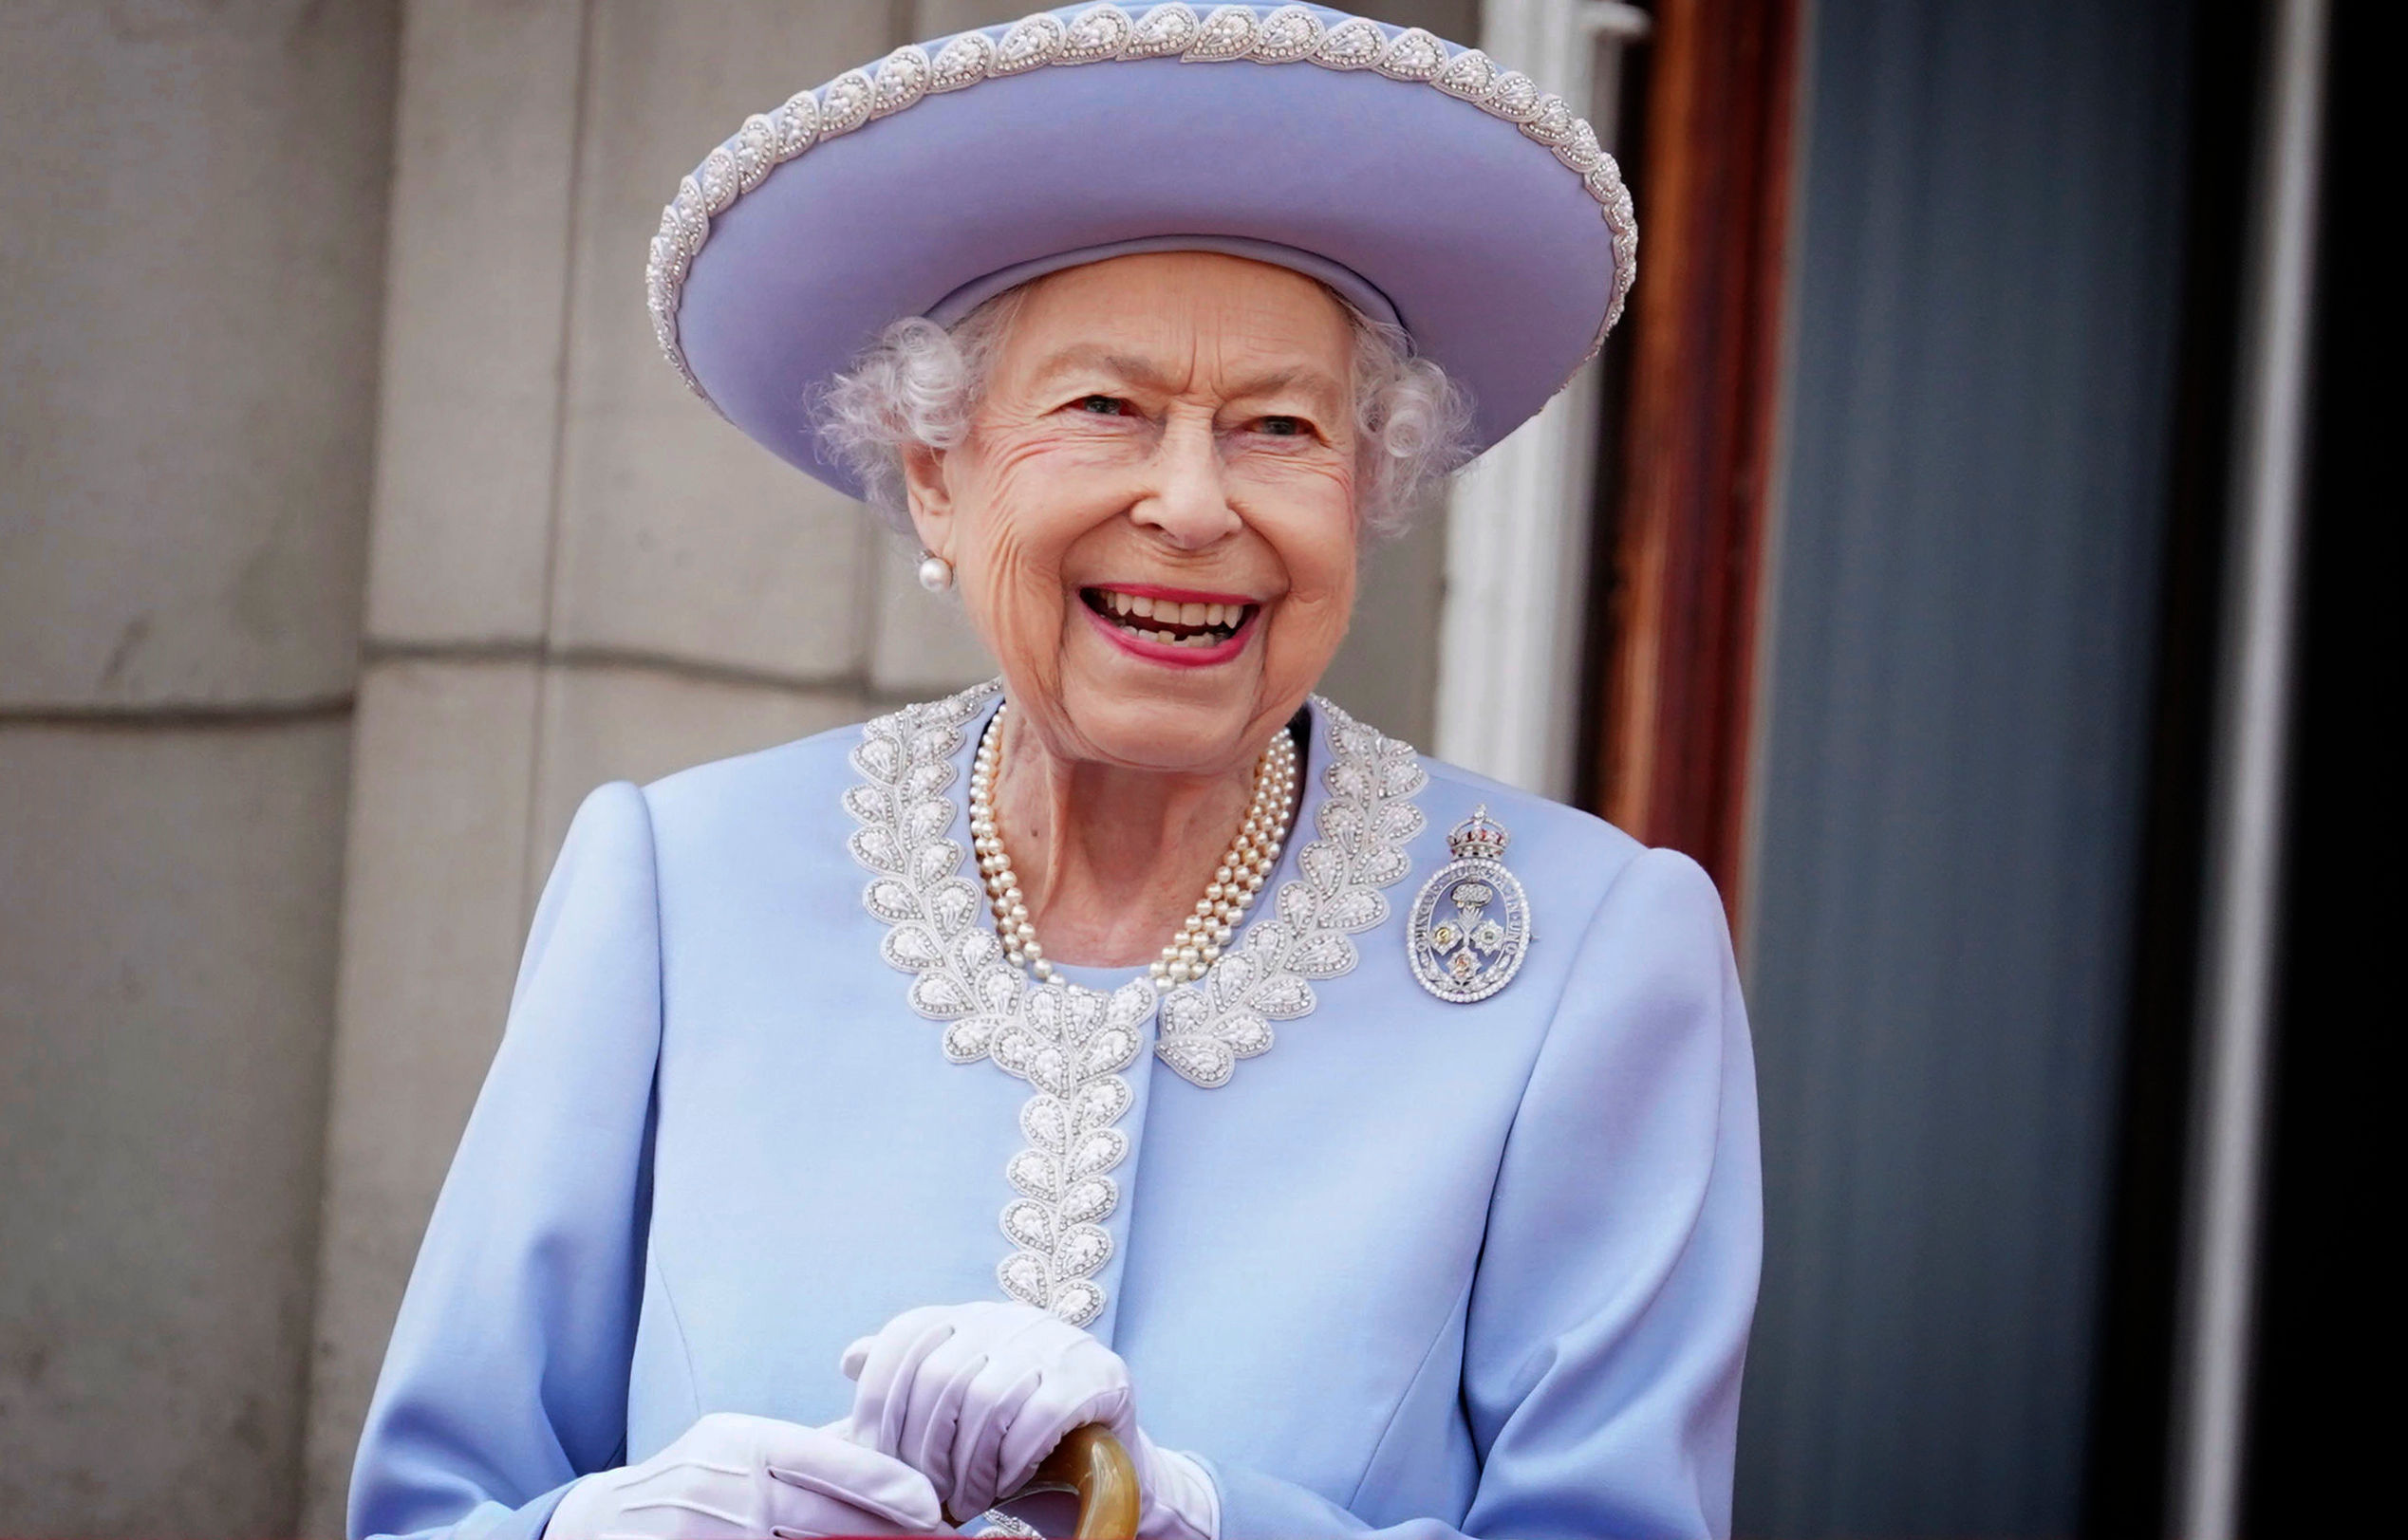 Toronto International Film Festival mourns the death of Queen Elizabeth II